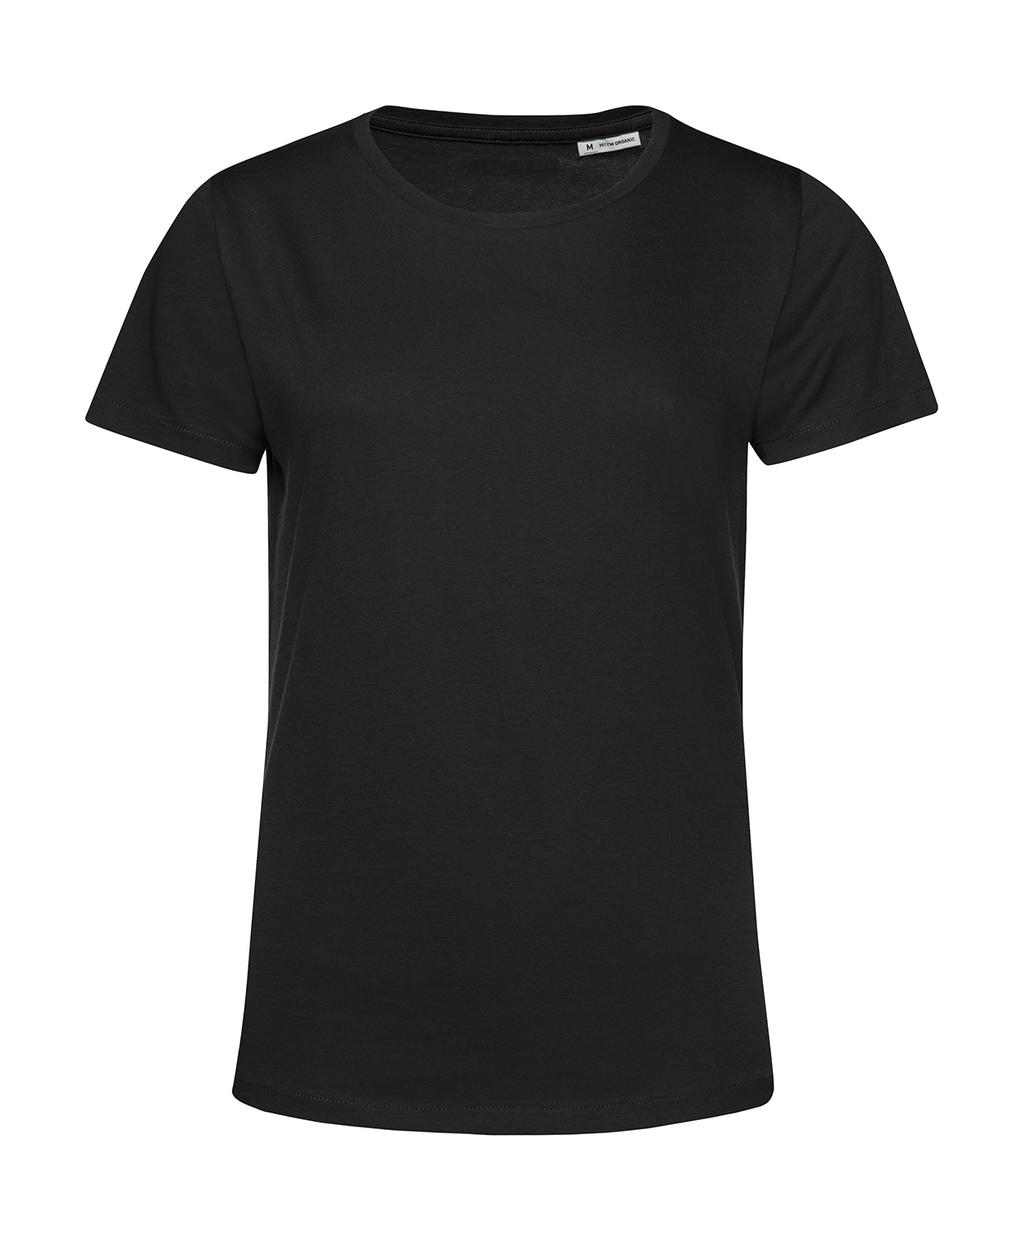 Tričko dámské BC Organic Inspire E150 - černé, S